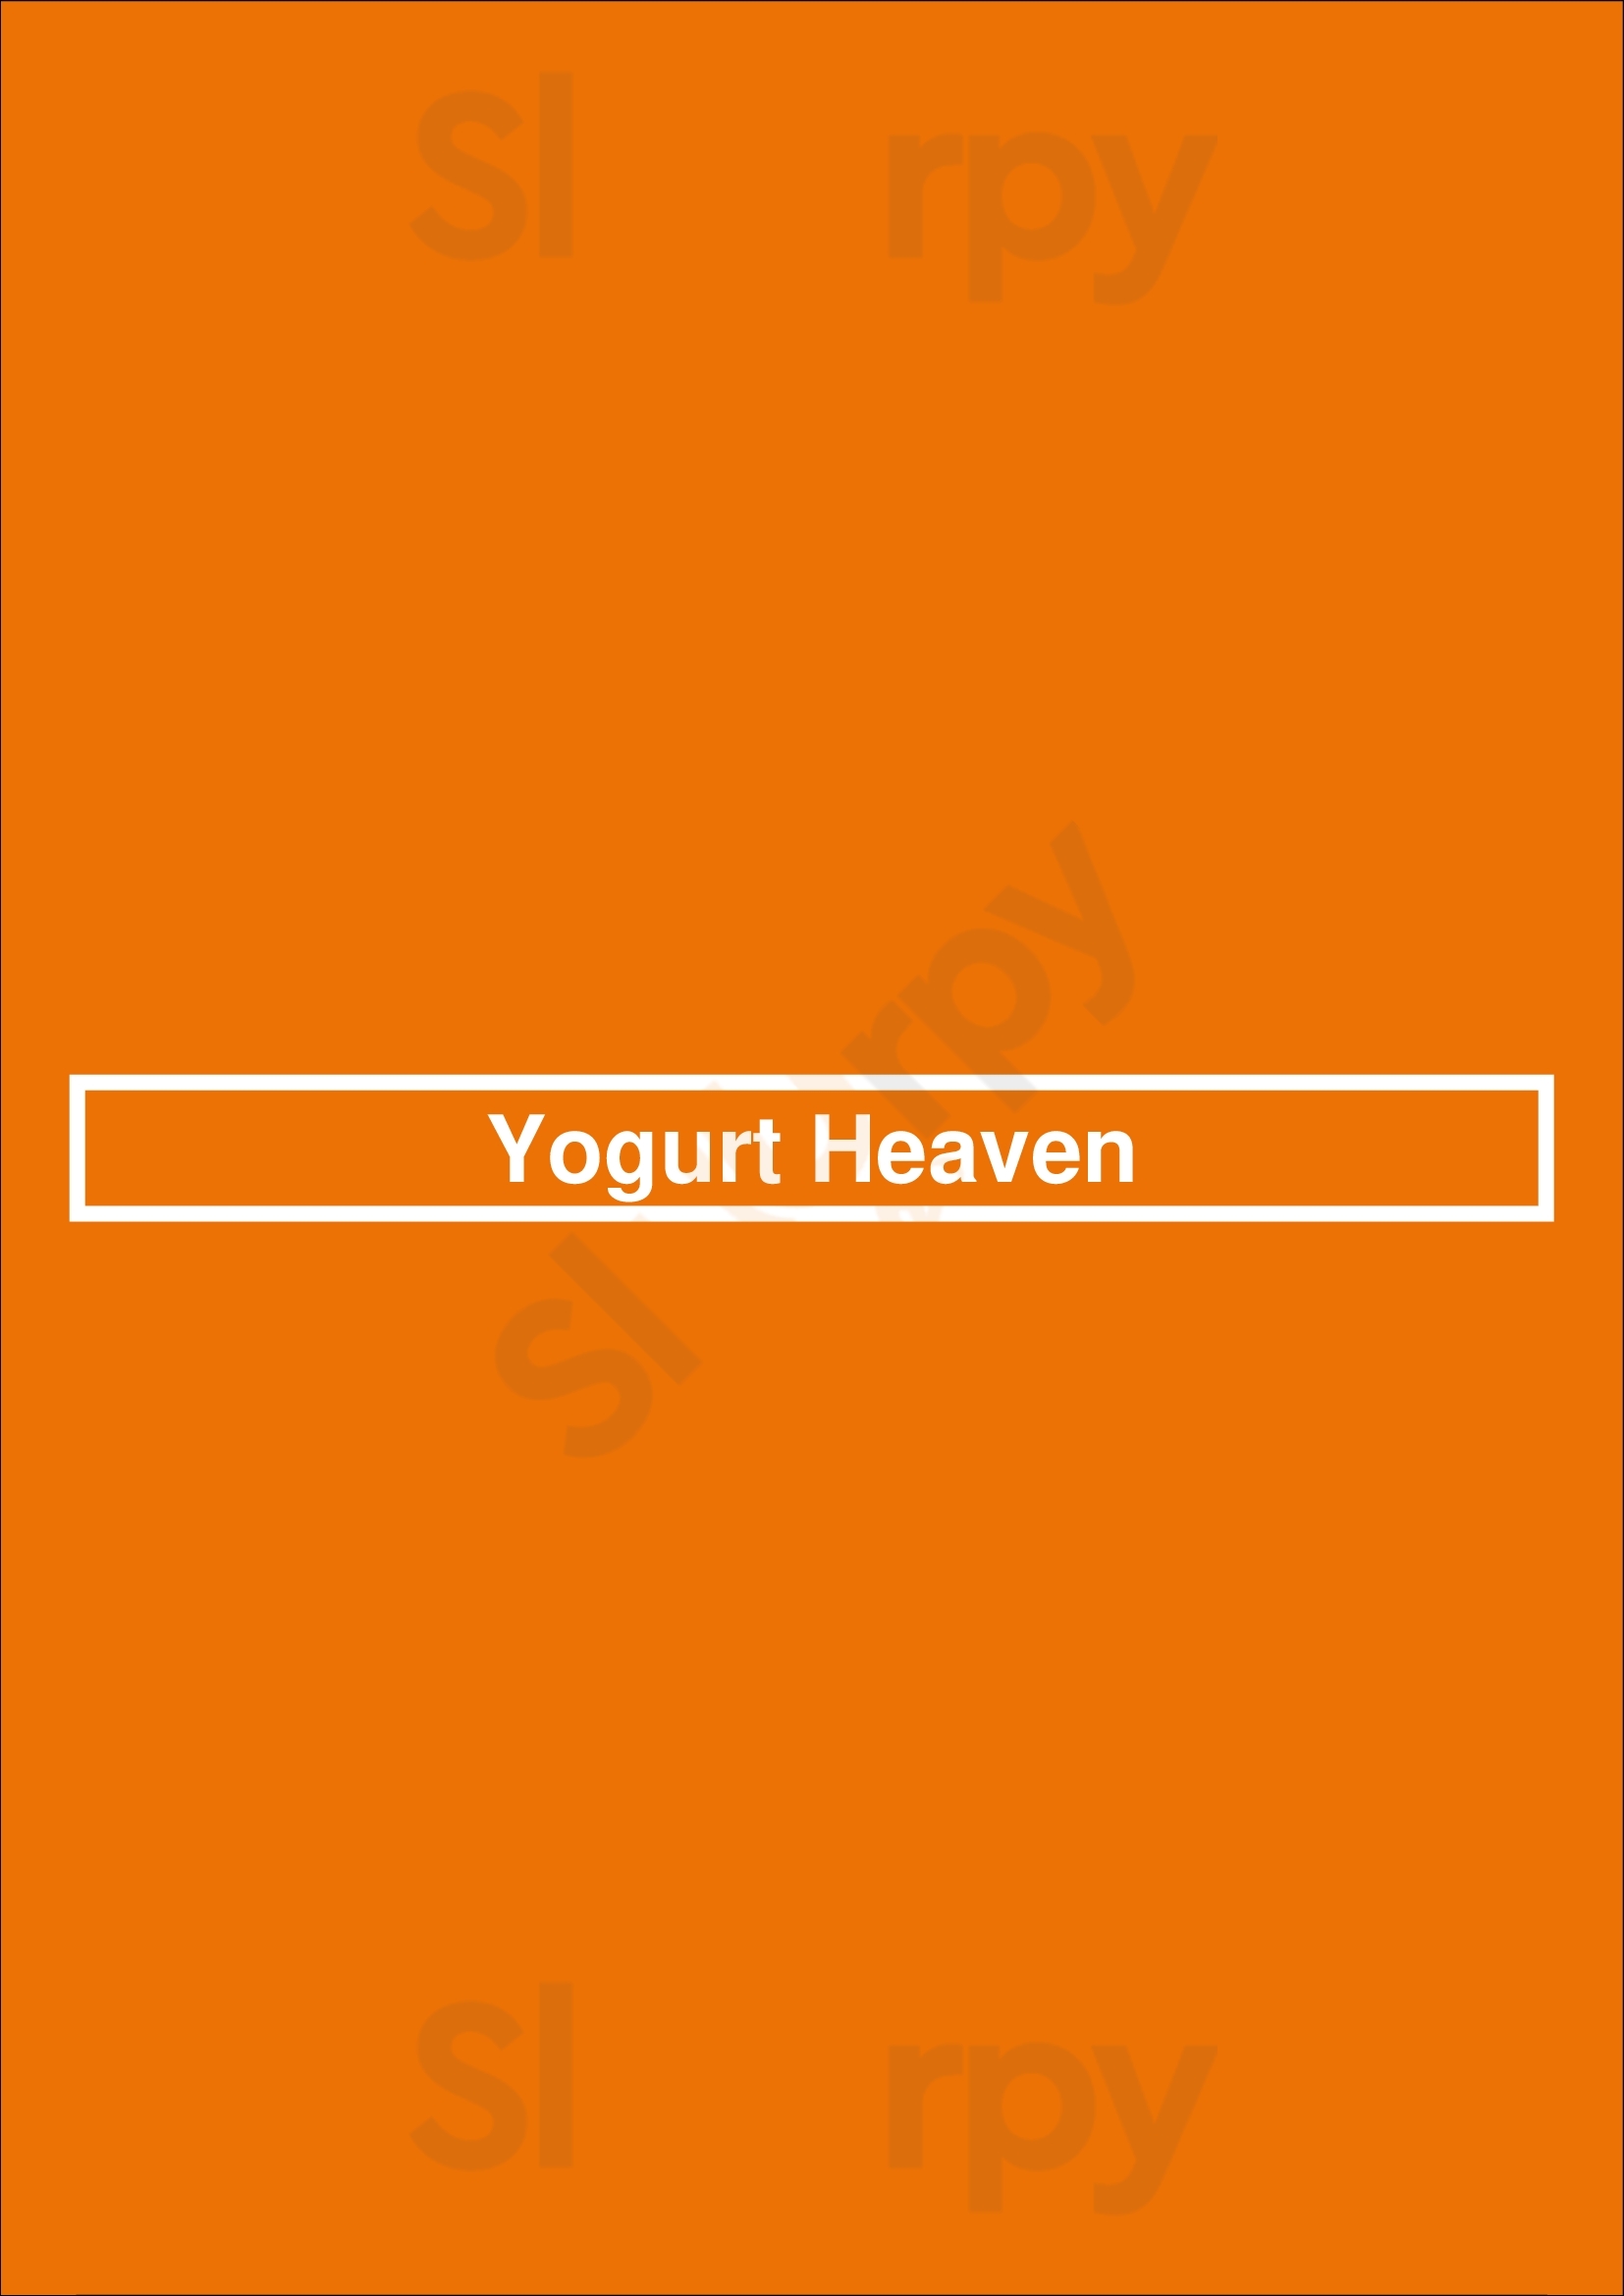 Yogurt Heaven La Jolla Menu - 1